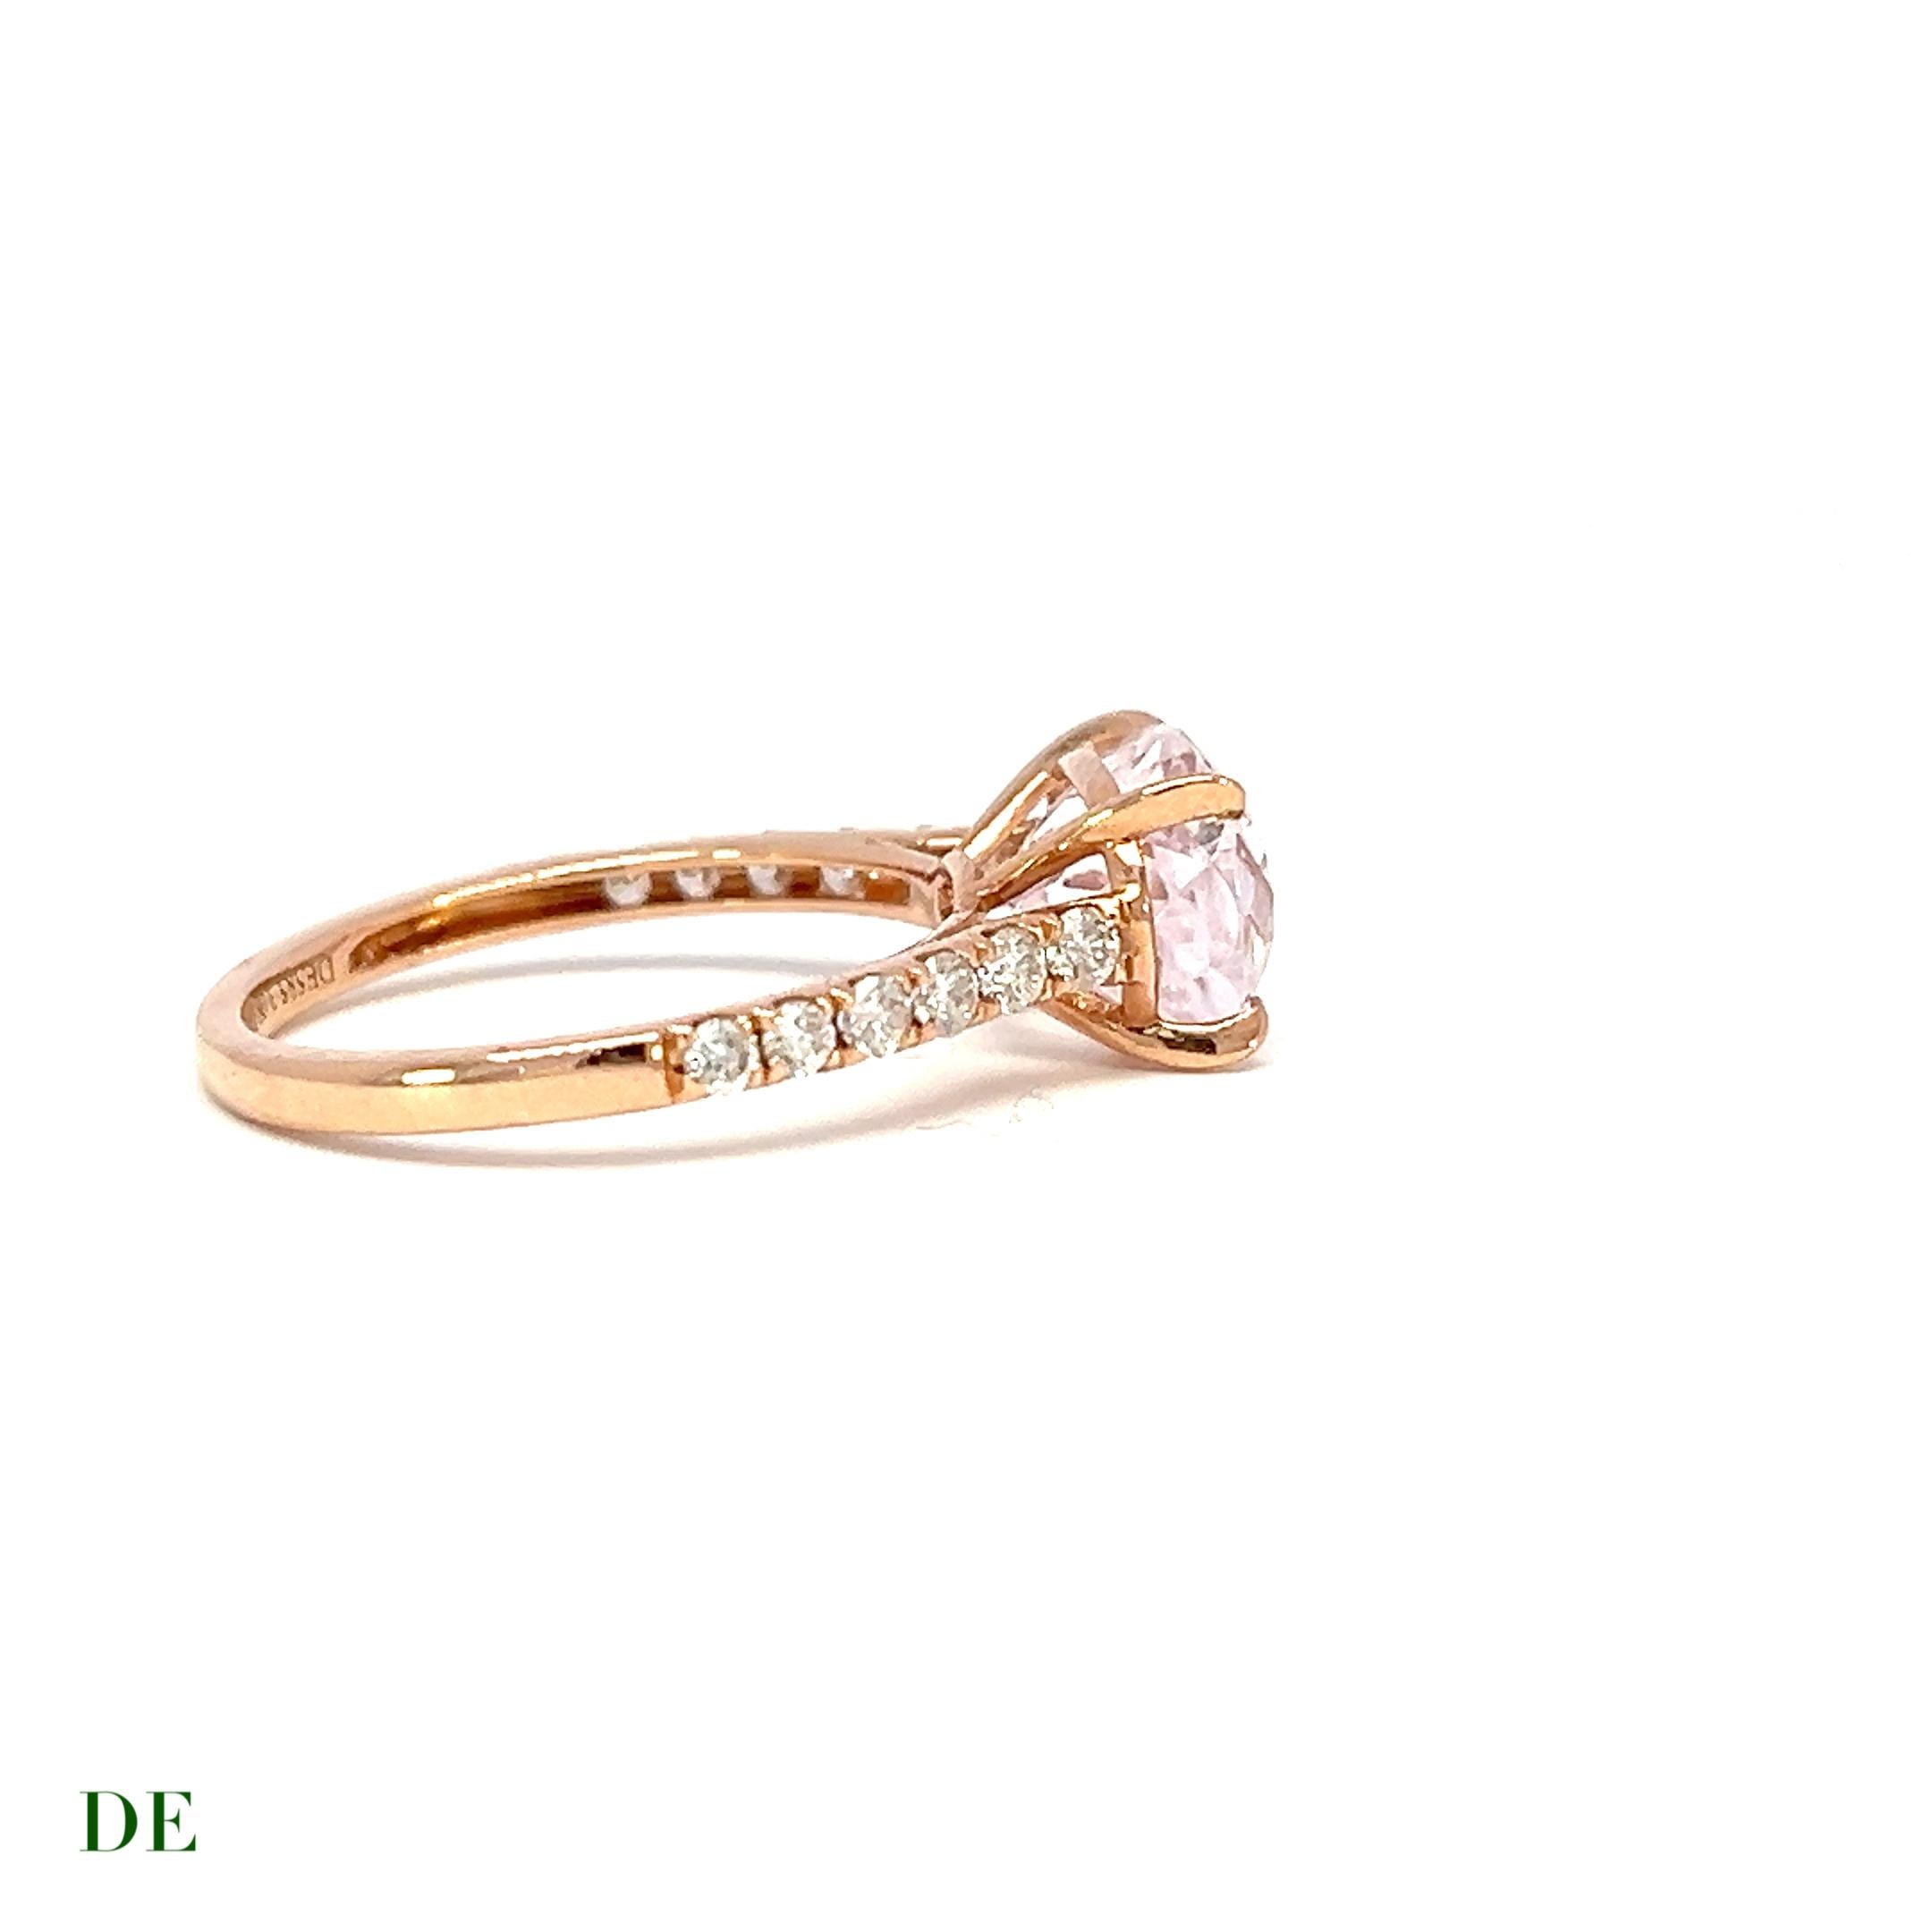 Women's or Men's Classic 14k Rose Gold 3.08 Carat Kunzite Diamond Stylish Band .31ct Diamond Ring For Sale